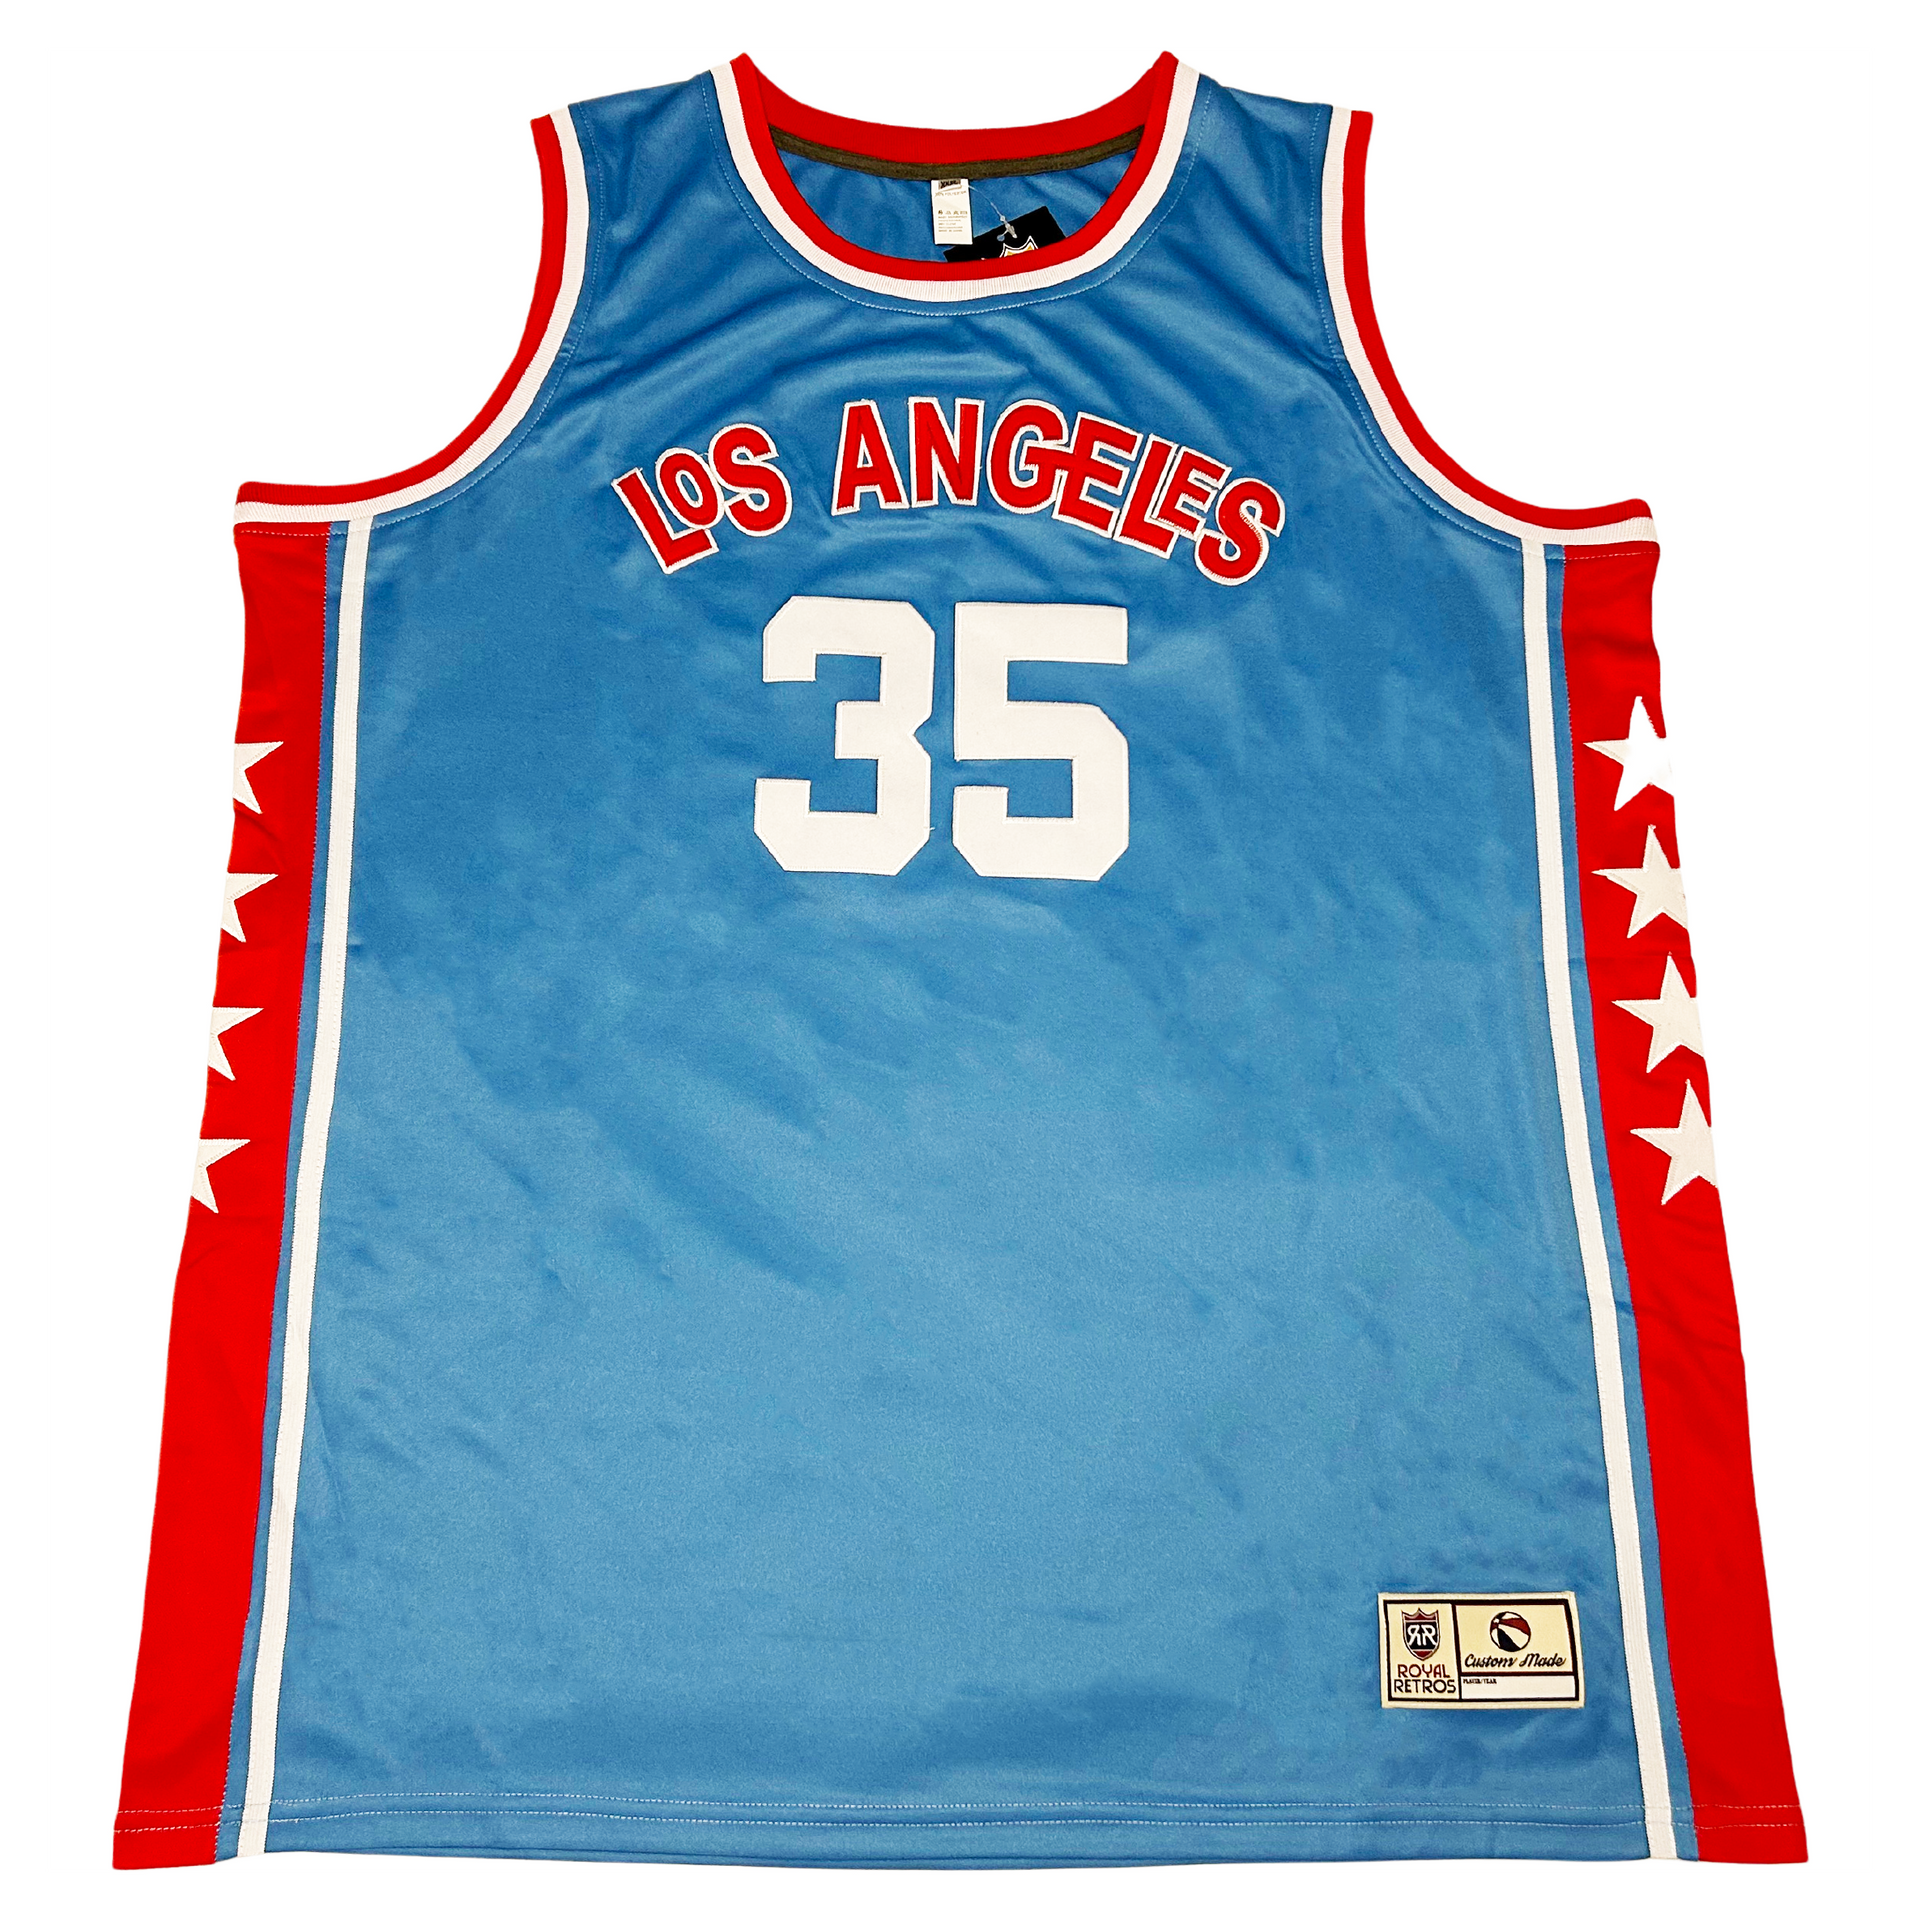 Los Angeles Stars ABA Jersey - White - Large - Royal Retros